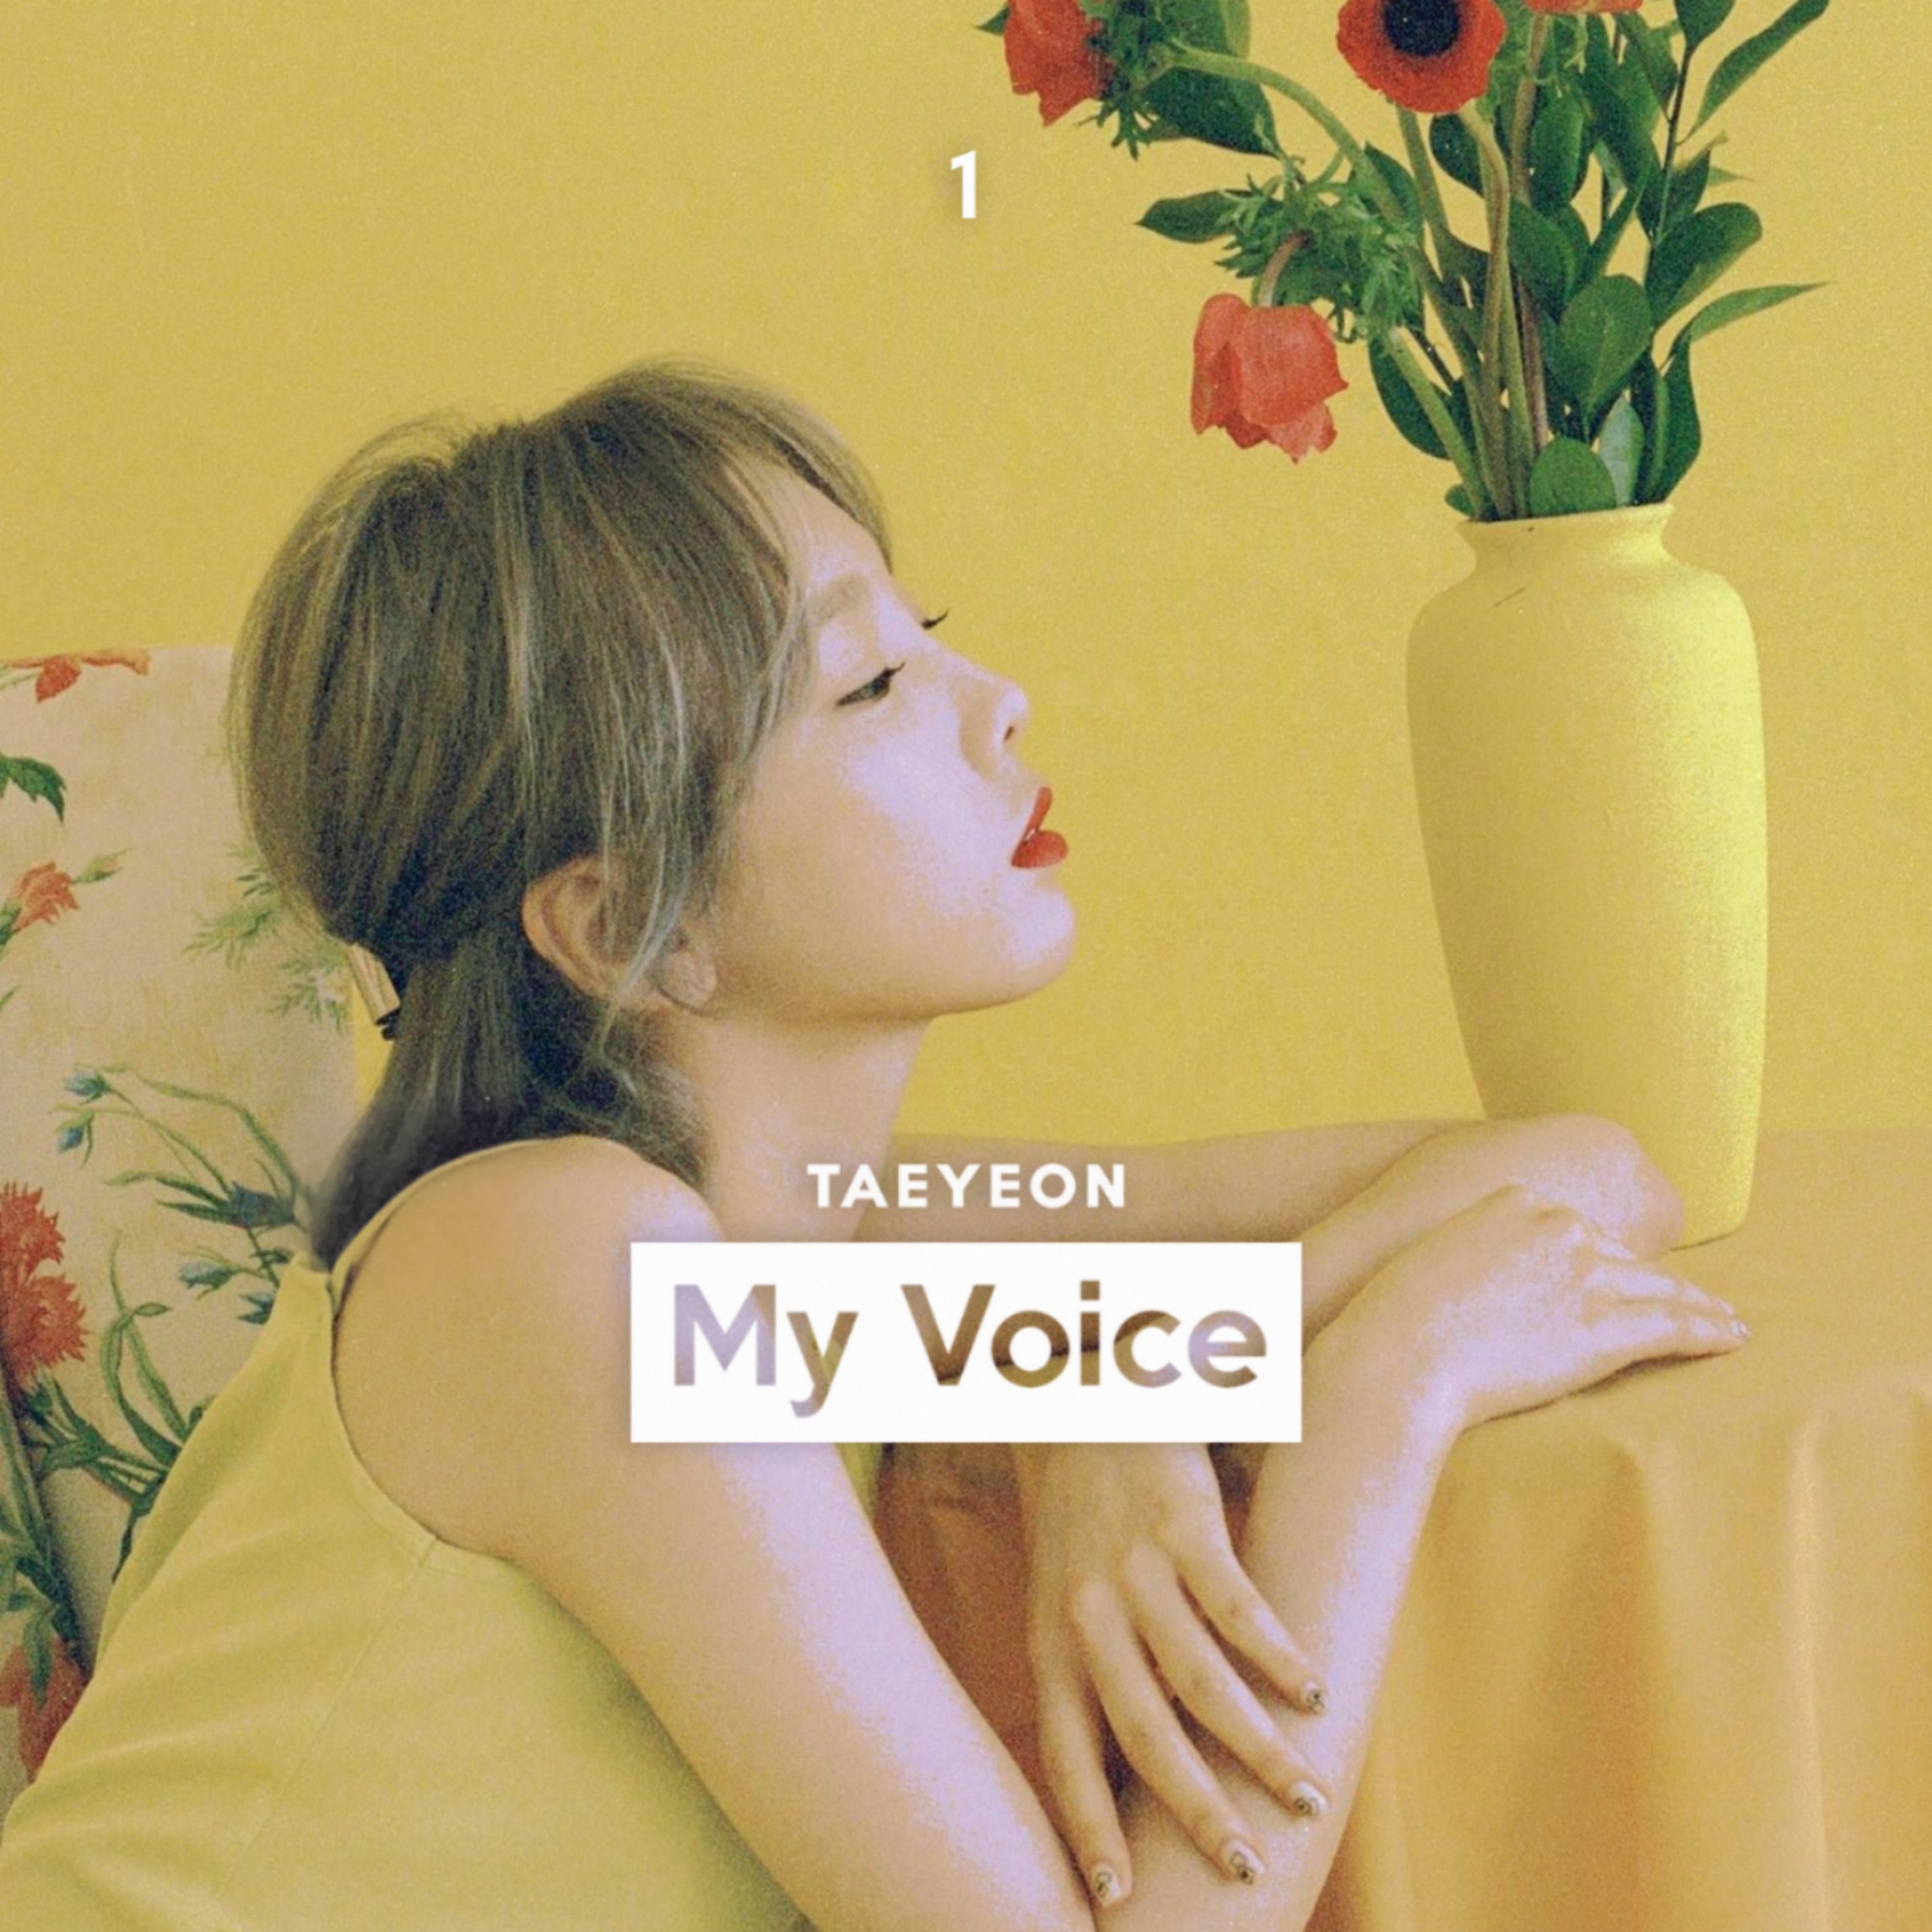 Taeyeon My Voice The 1st Album Album Cover By Lealbum On Deviantart